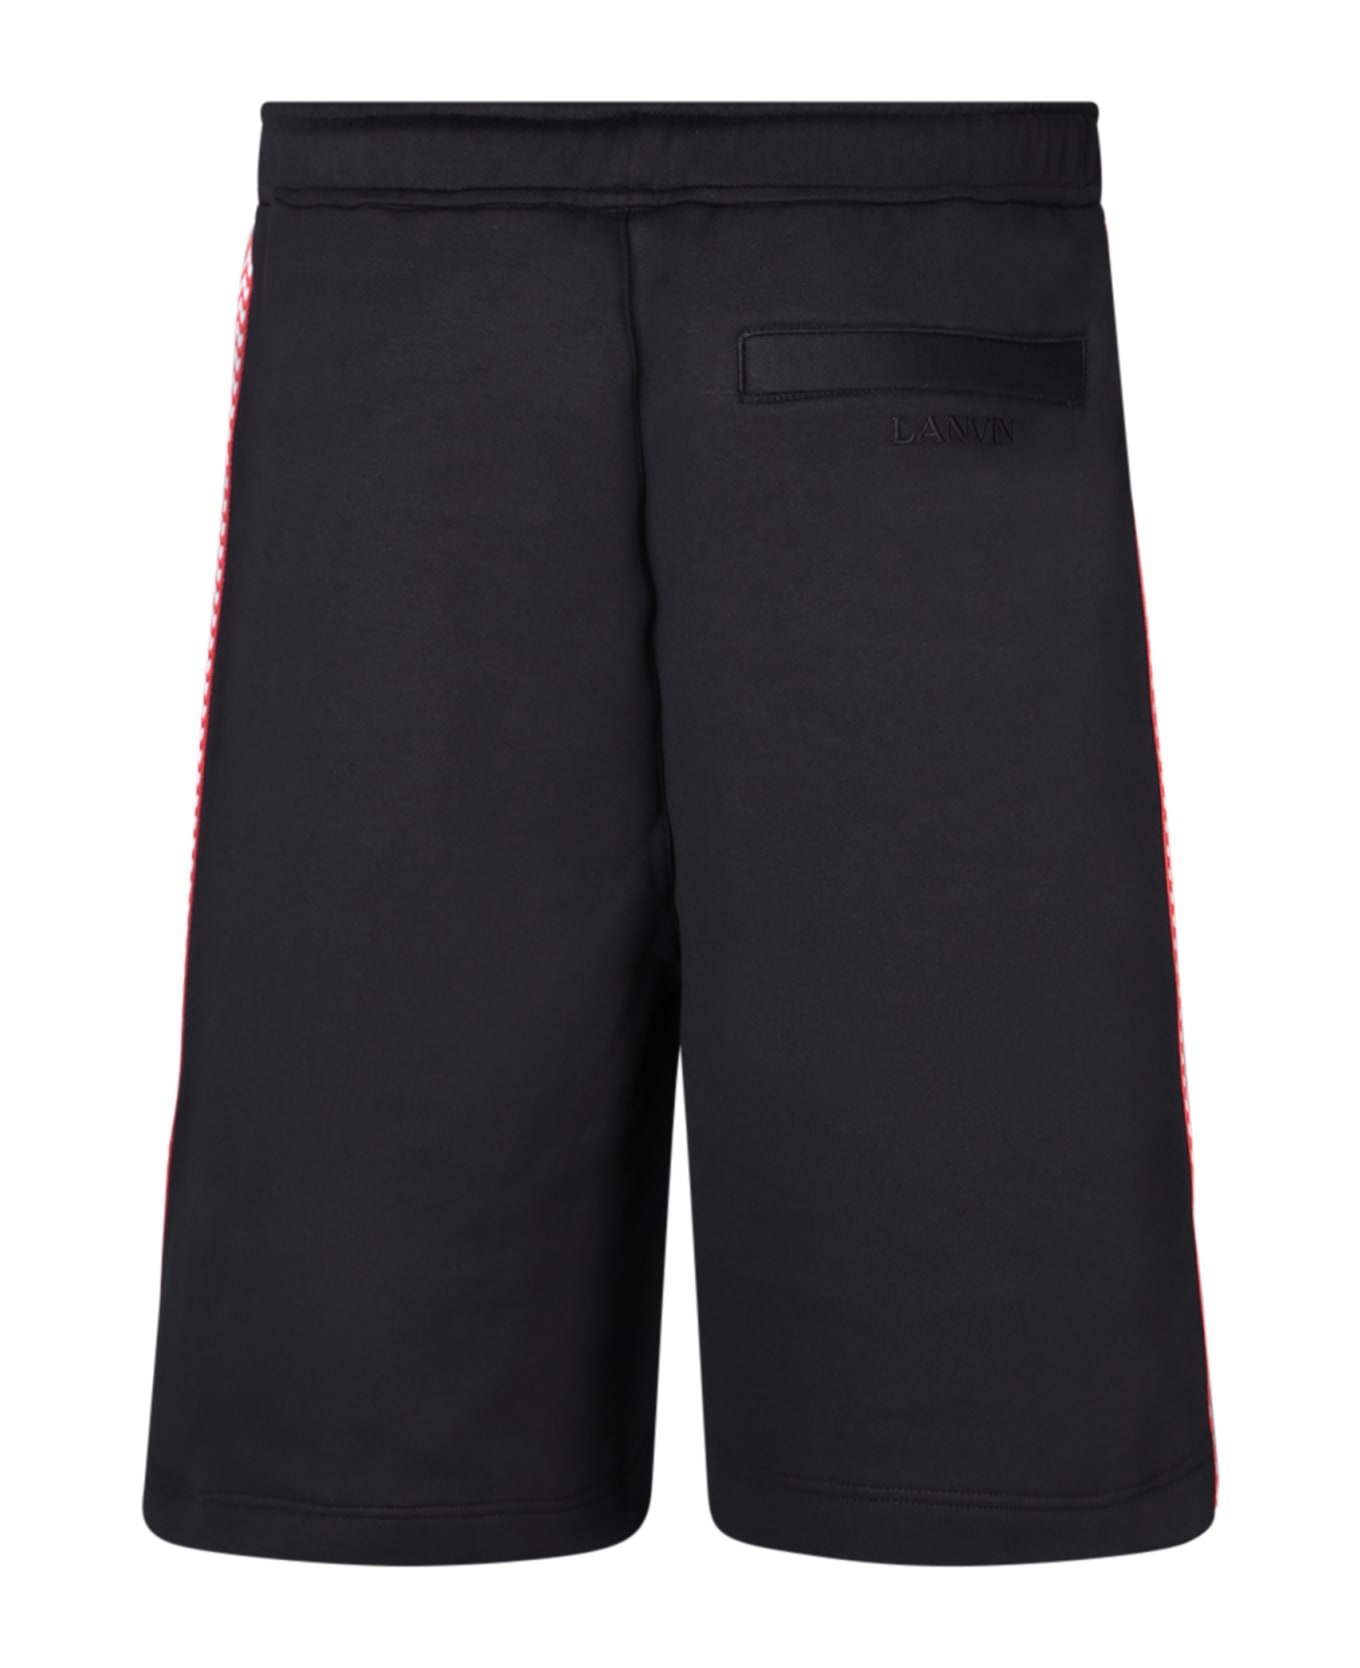 Lanvin 'side Curb' Bermuda Shorts - Black ショートパンツ